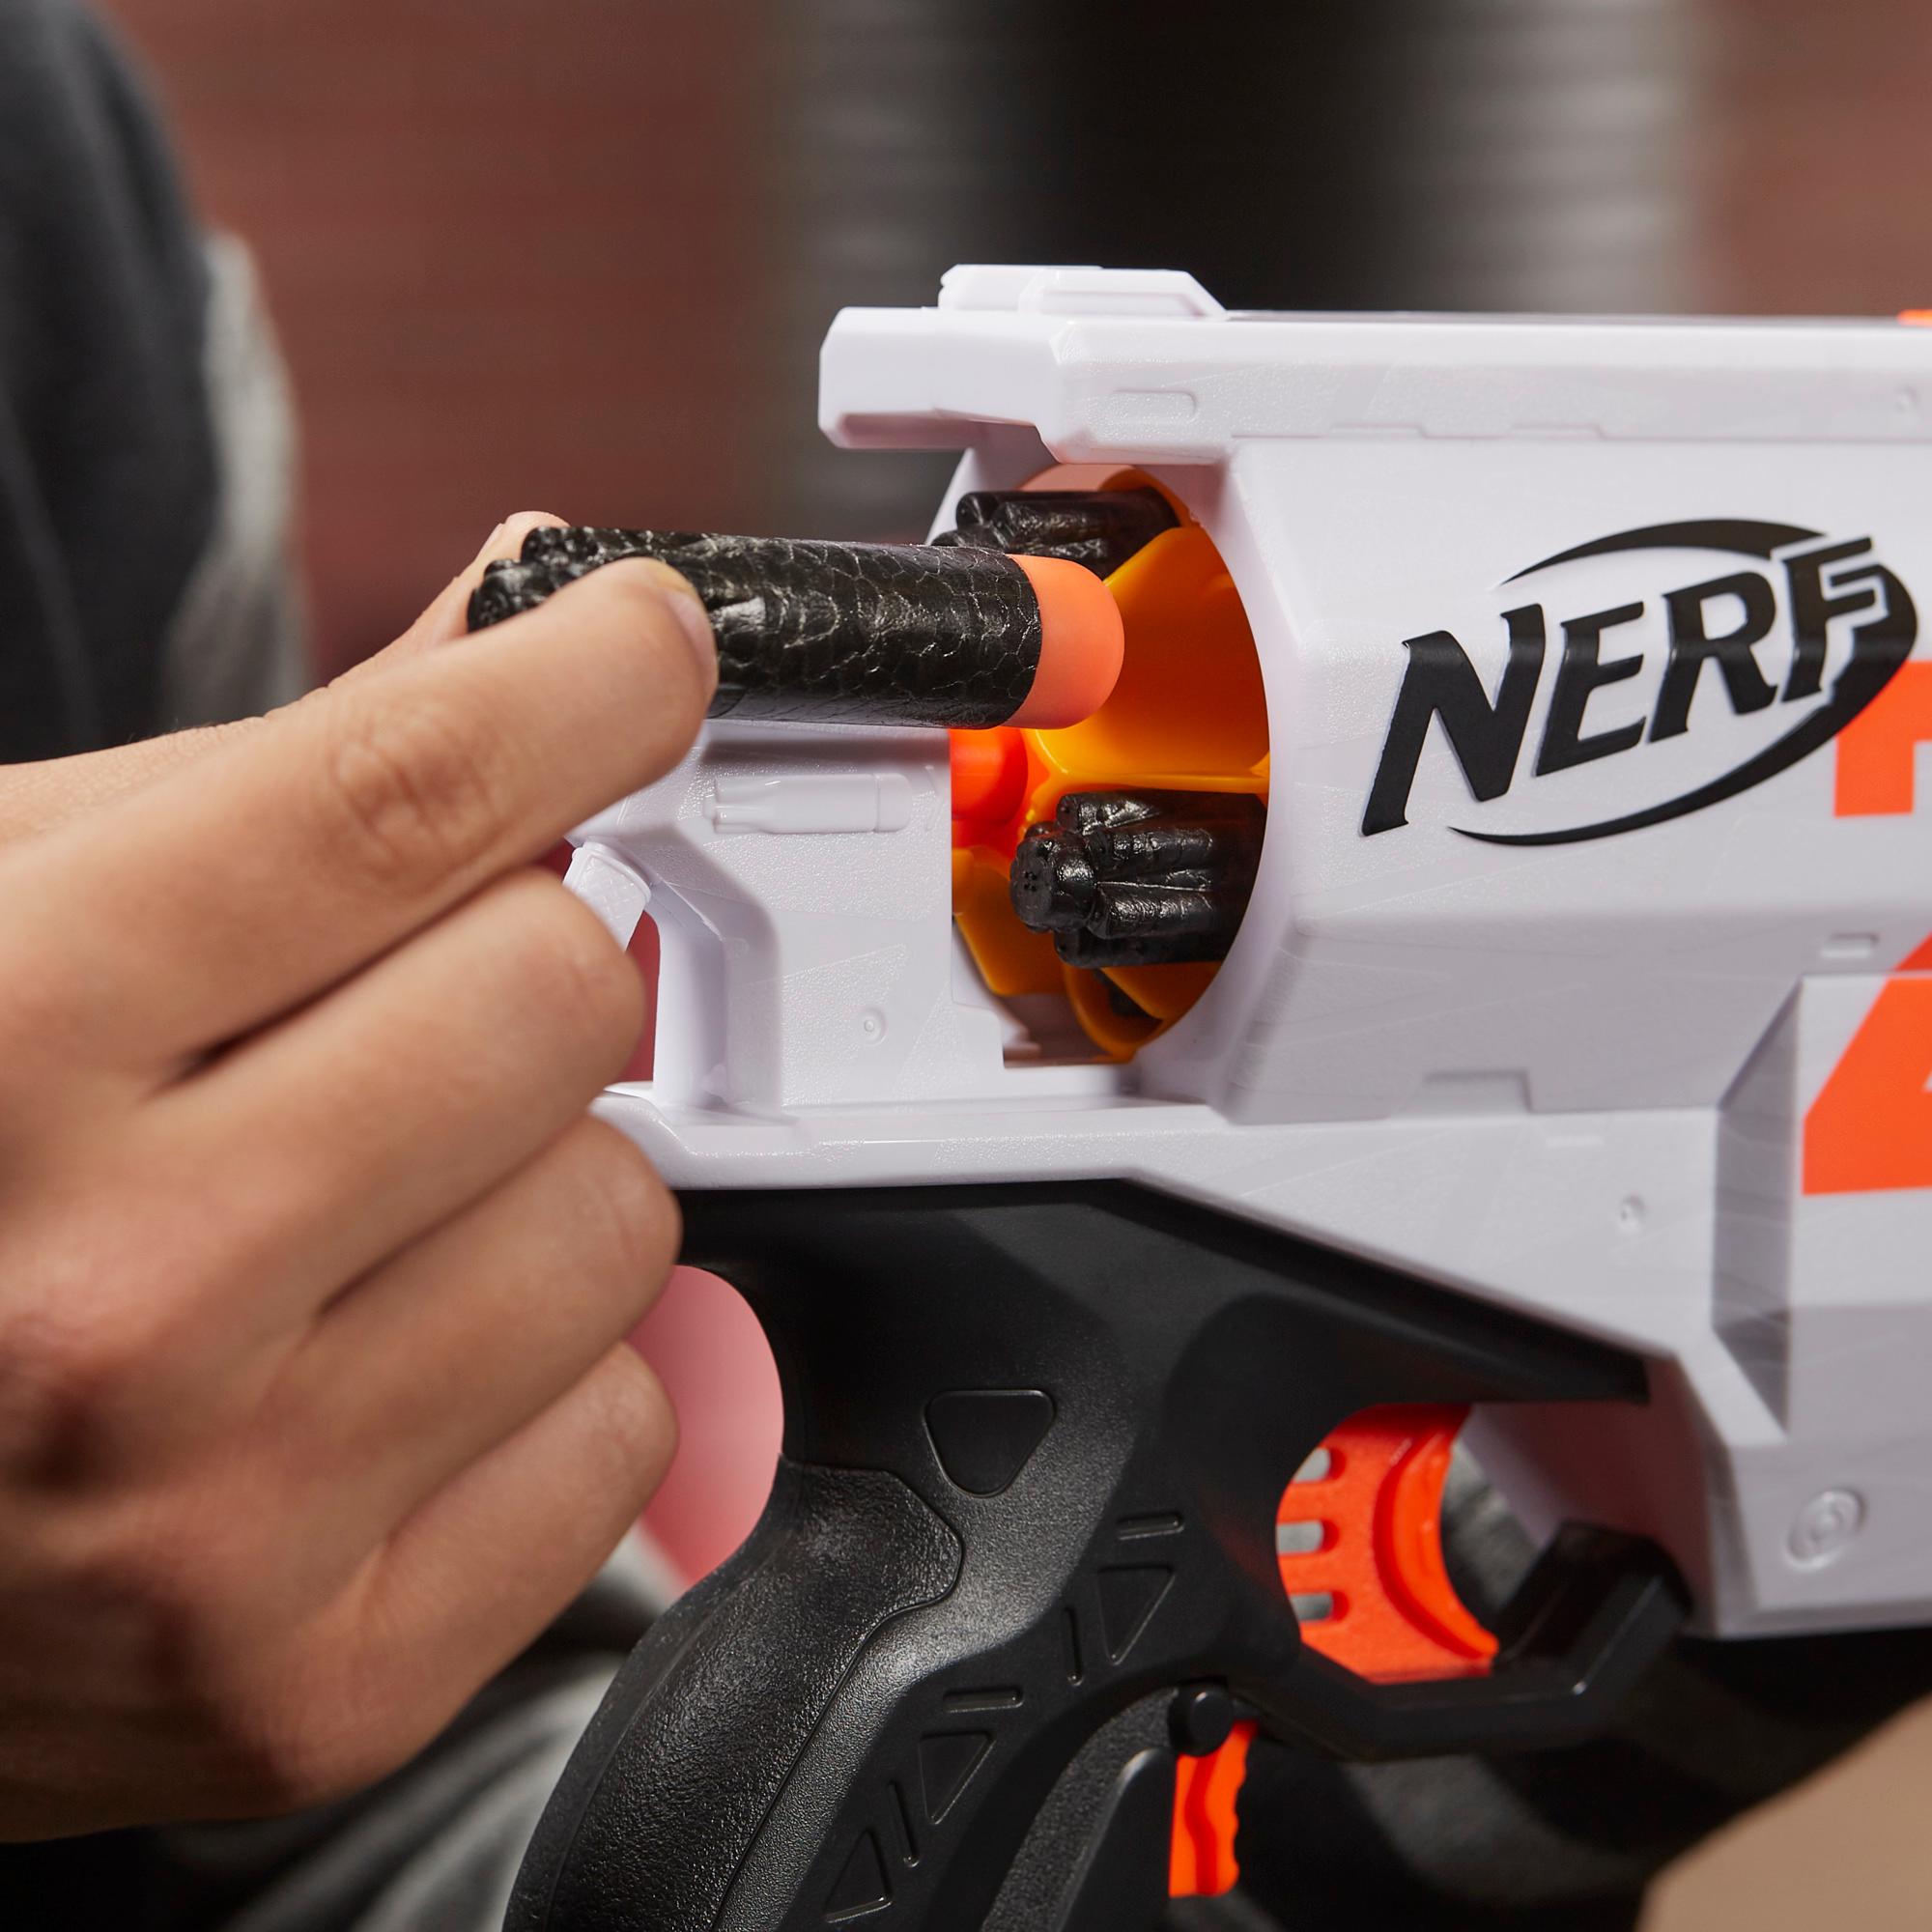 Nerf Ultra Two - Blaster motorisé, recharge rapide, inclut 6 fléchettes Nerf Ultra, compatible uniquement avec les fléchettes Nerf Ultra